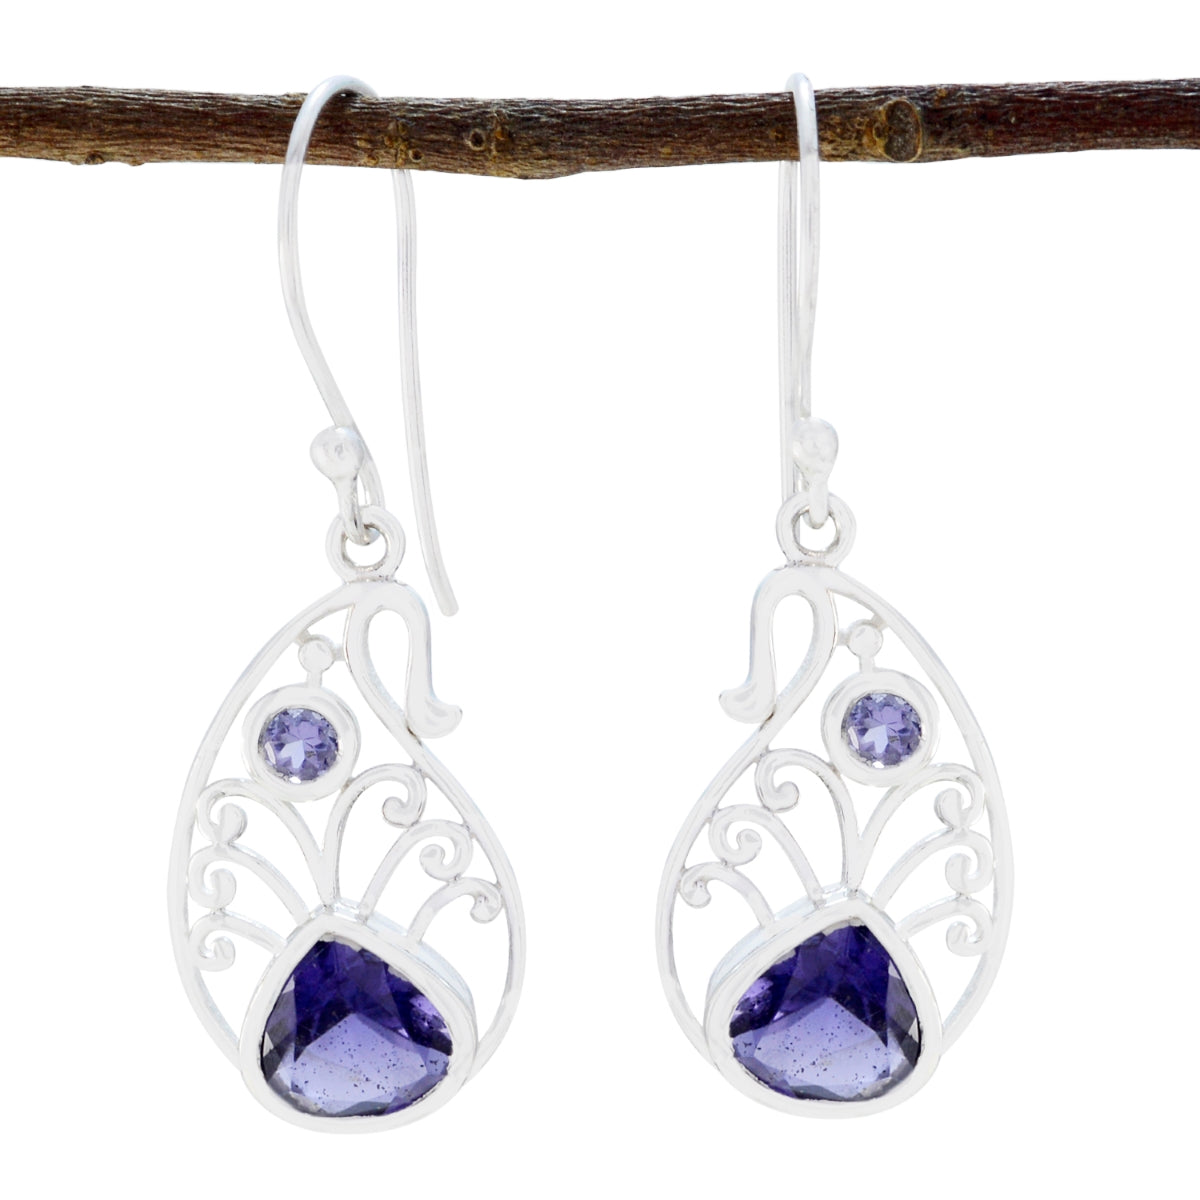 Riyo Genuine Gems multi shape Faceted Nevy Blue Iolite Silver Earrings b' day gift